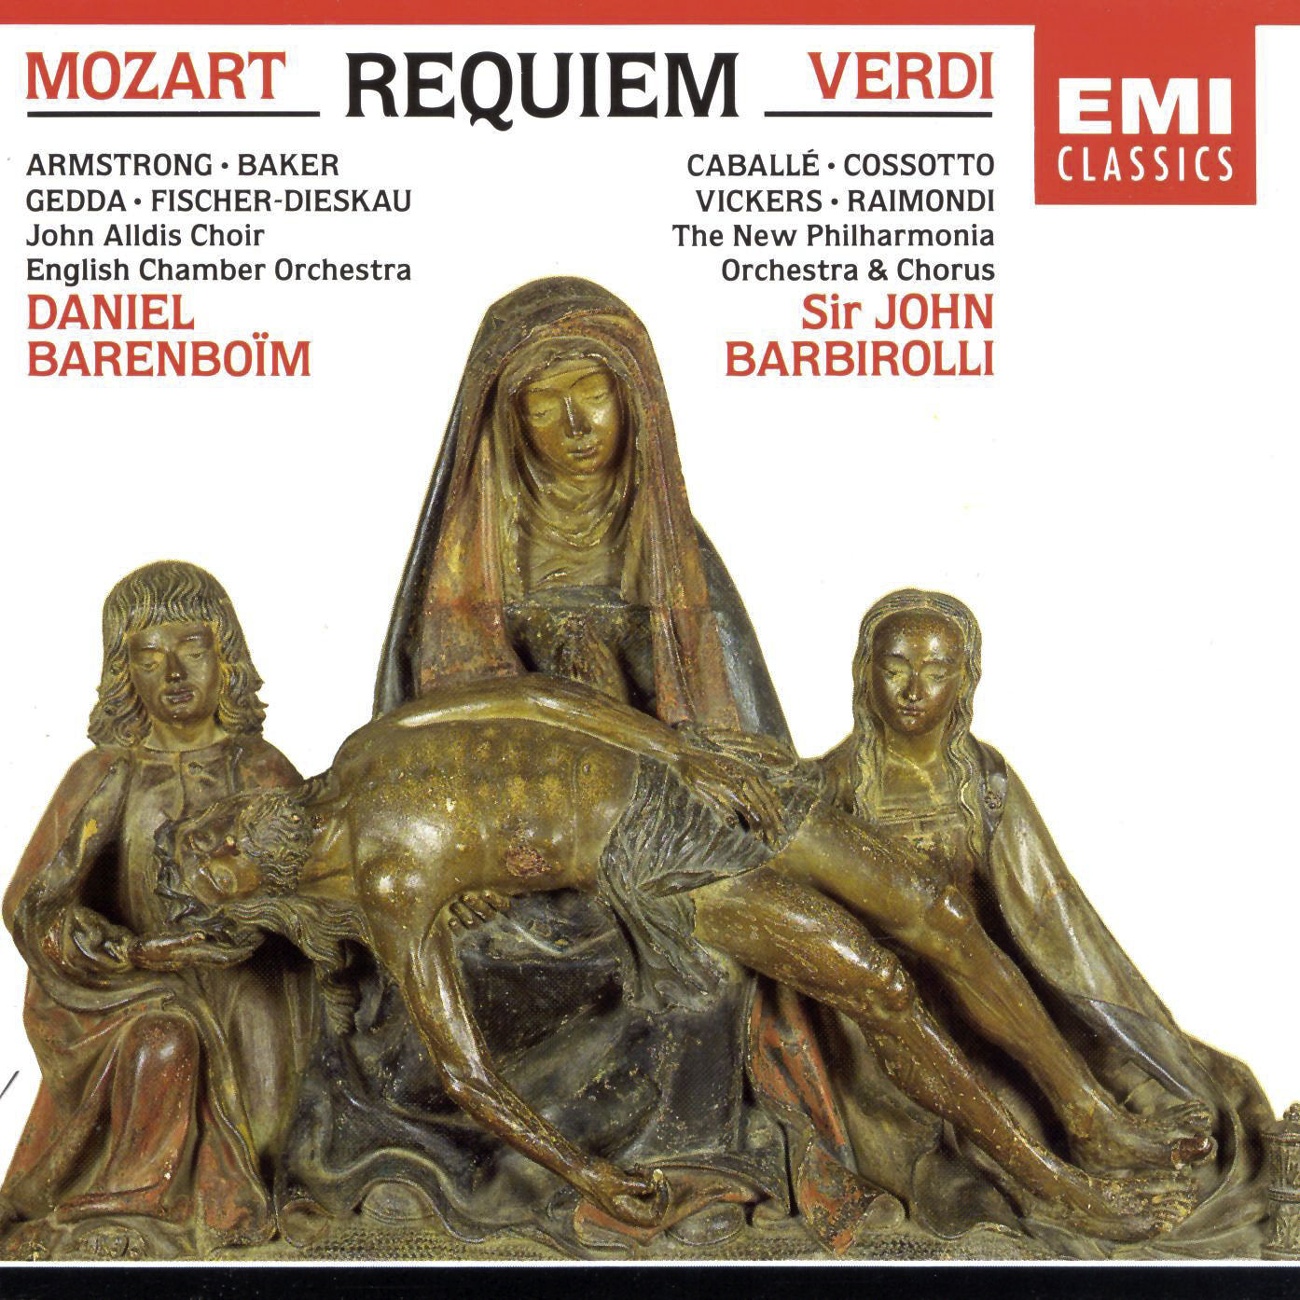 Messa da Requiem (1990 Digital Remaster): Lux aeterna